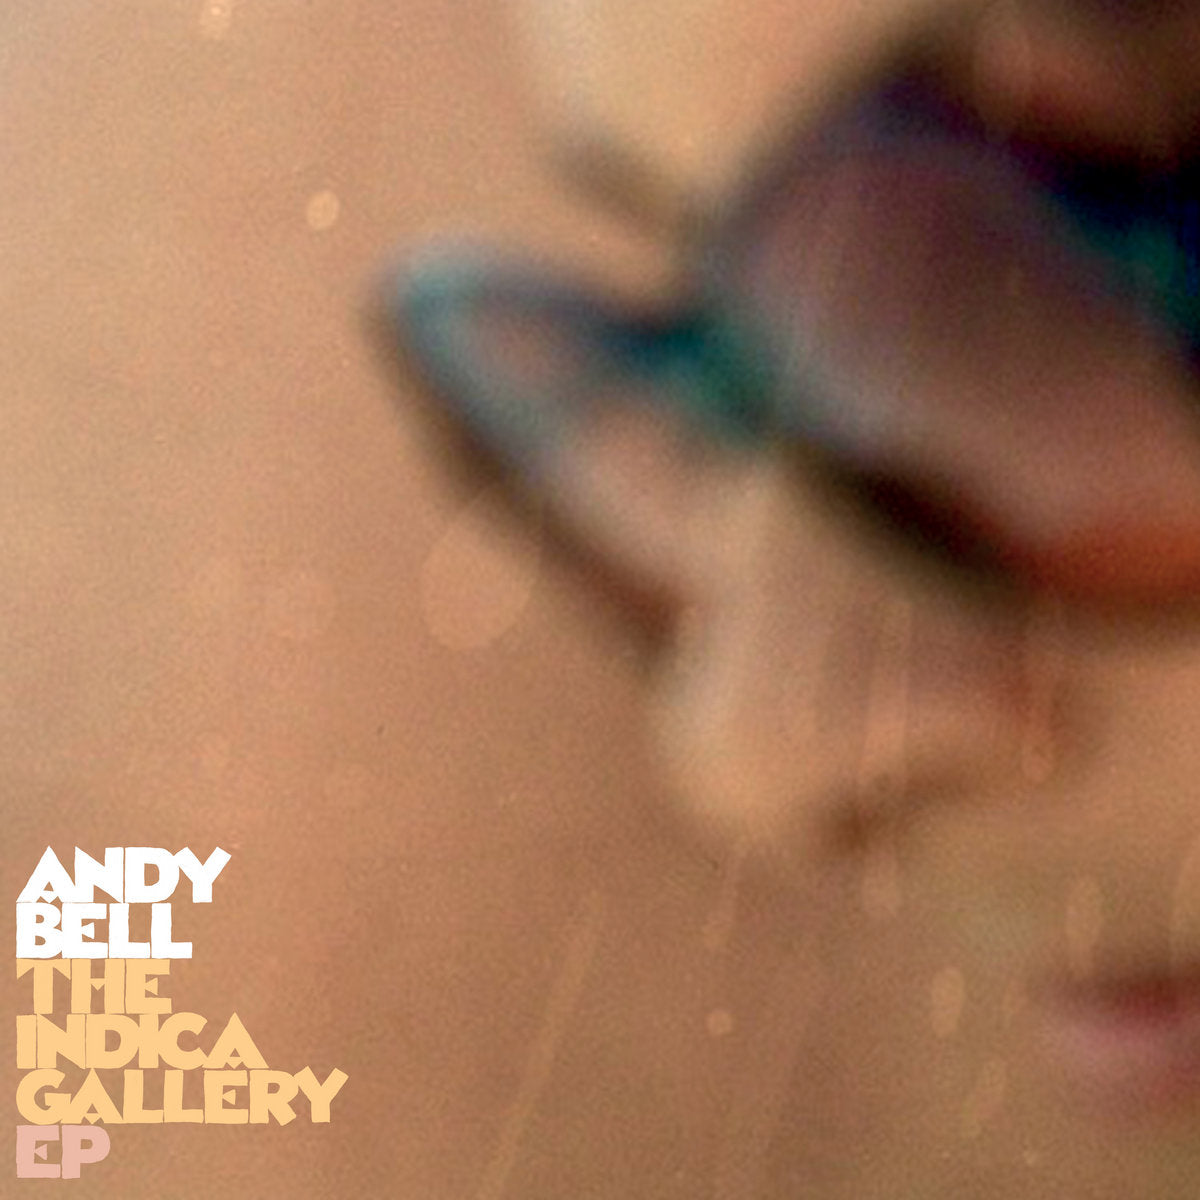 ANDY BELL MEETS PYE CORNER AUDIO UPTOWN - The Indica Gallery EP - 12" - Cherry Cola Vinyl